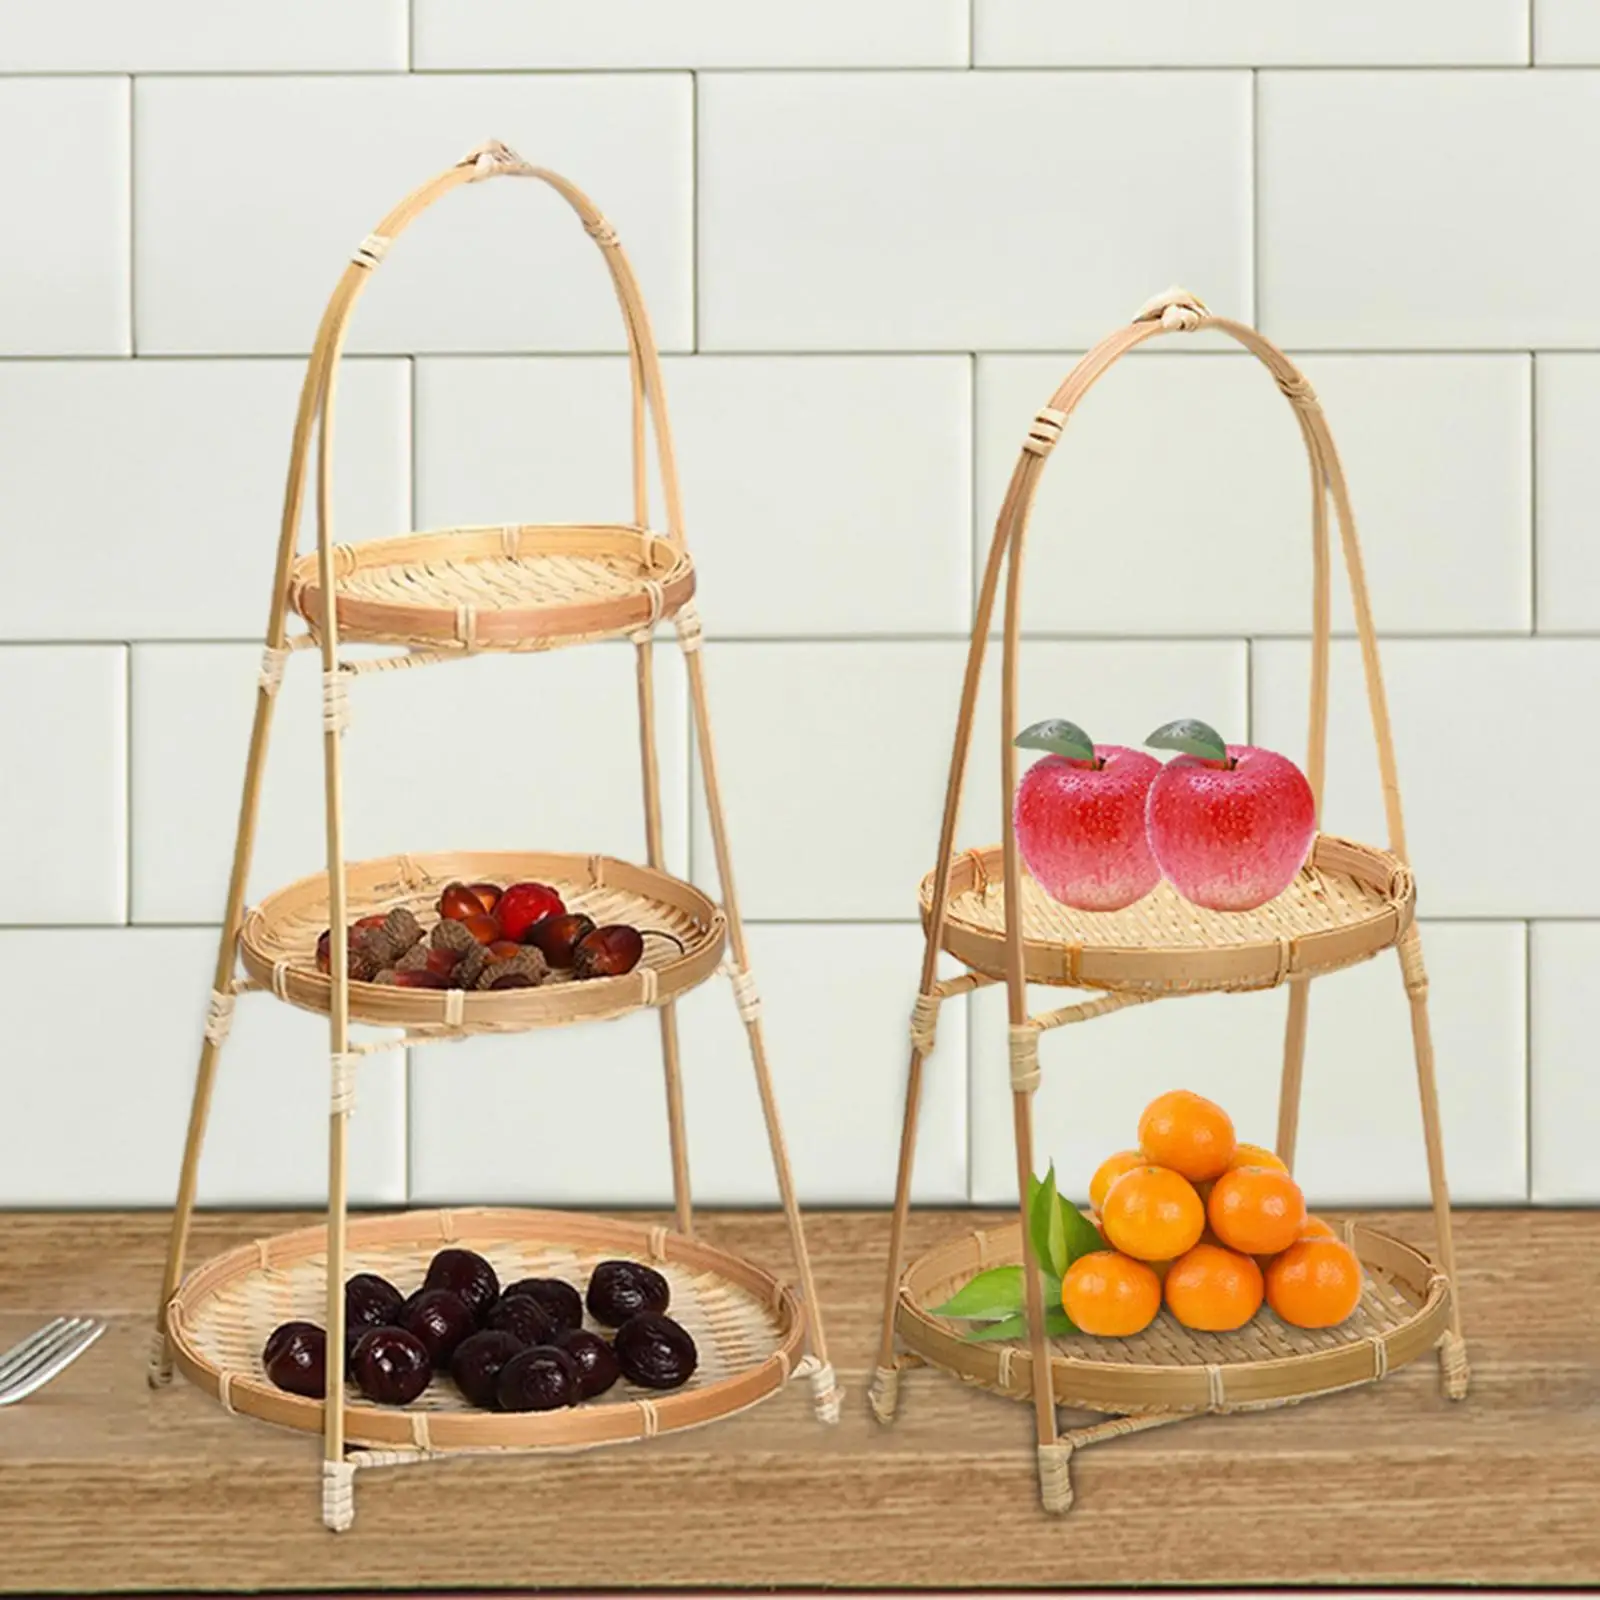 Serving Trays Snack Cookies Display Handwoven Fruit Basket Fruit Basket Organizer for Kitchen Restaurant Table Dining Room